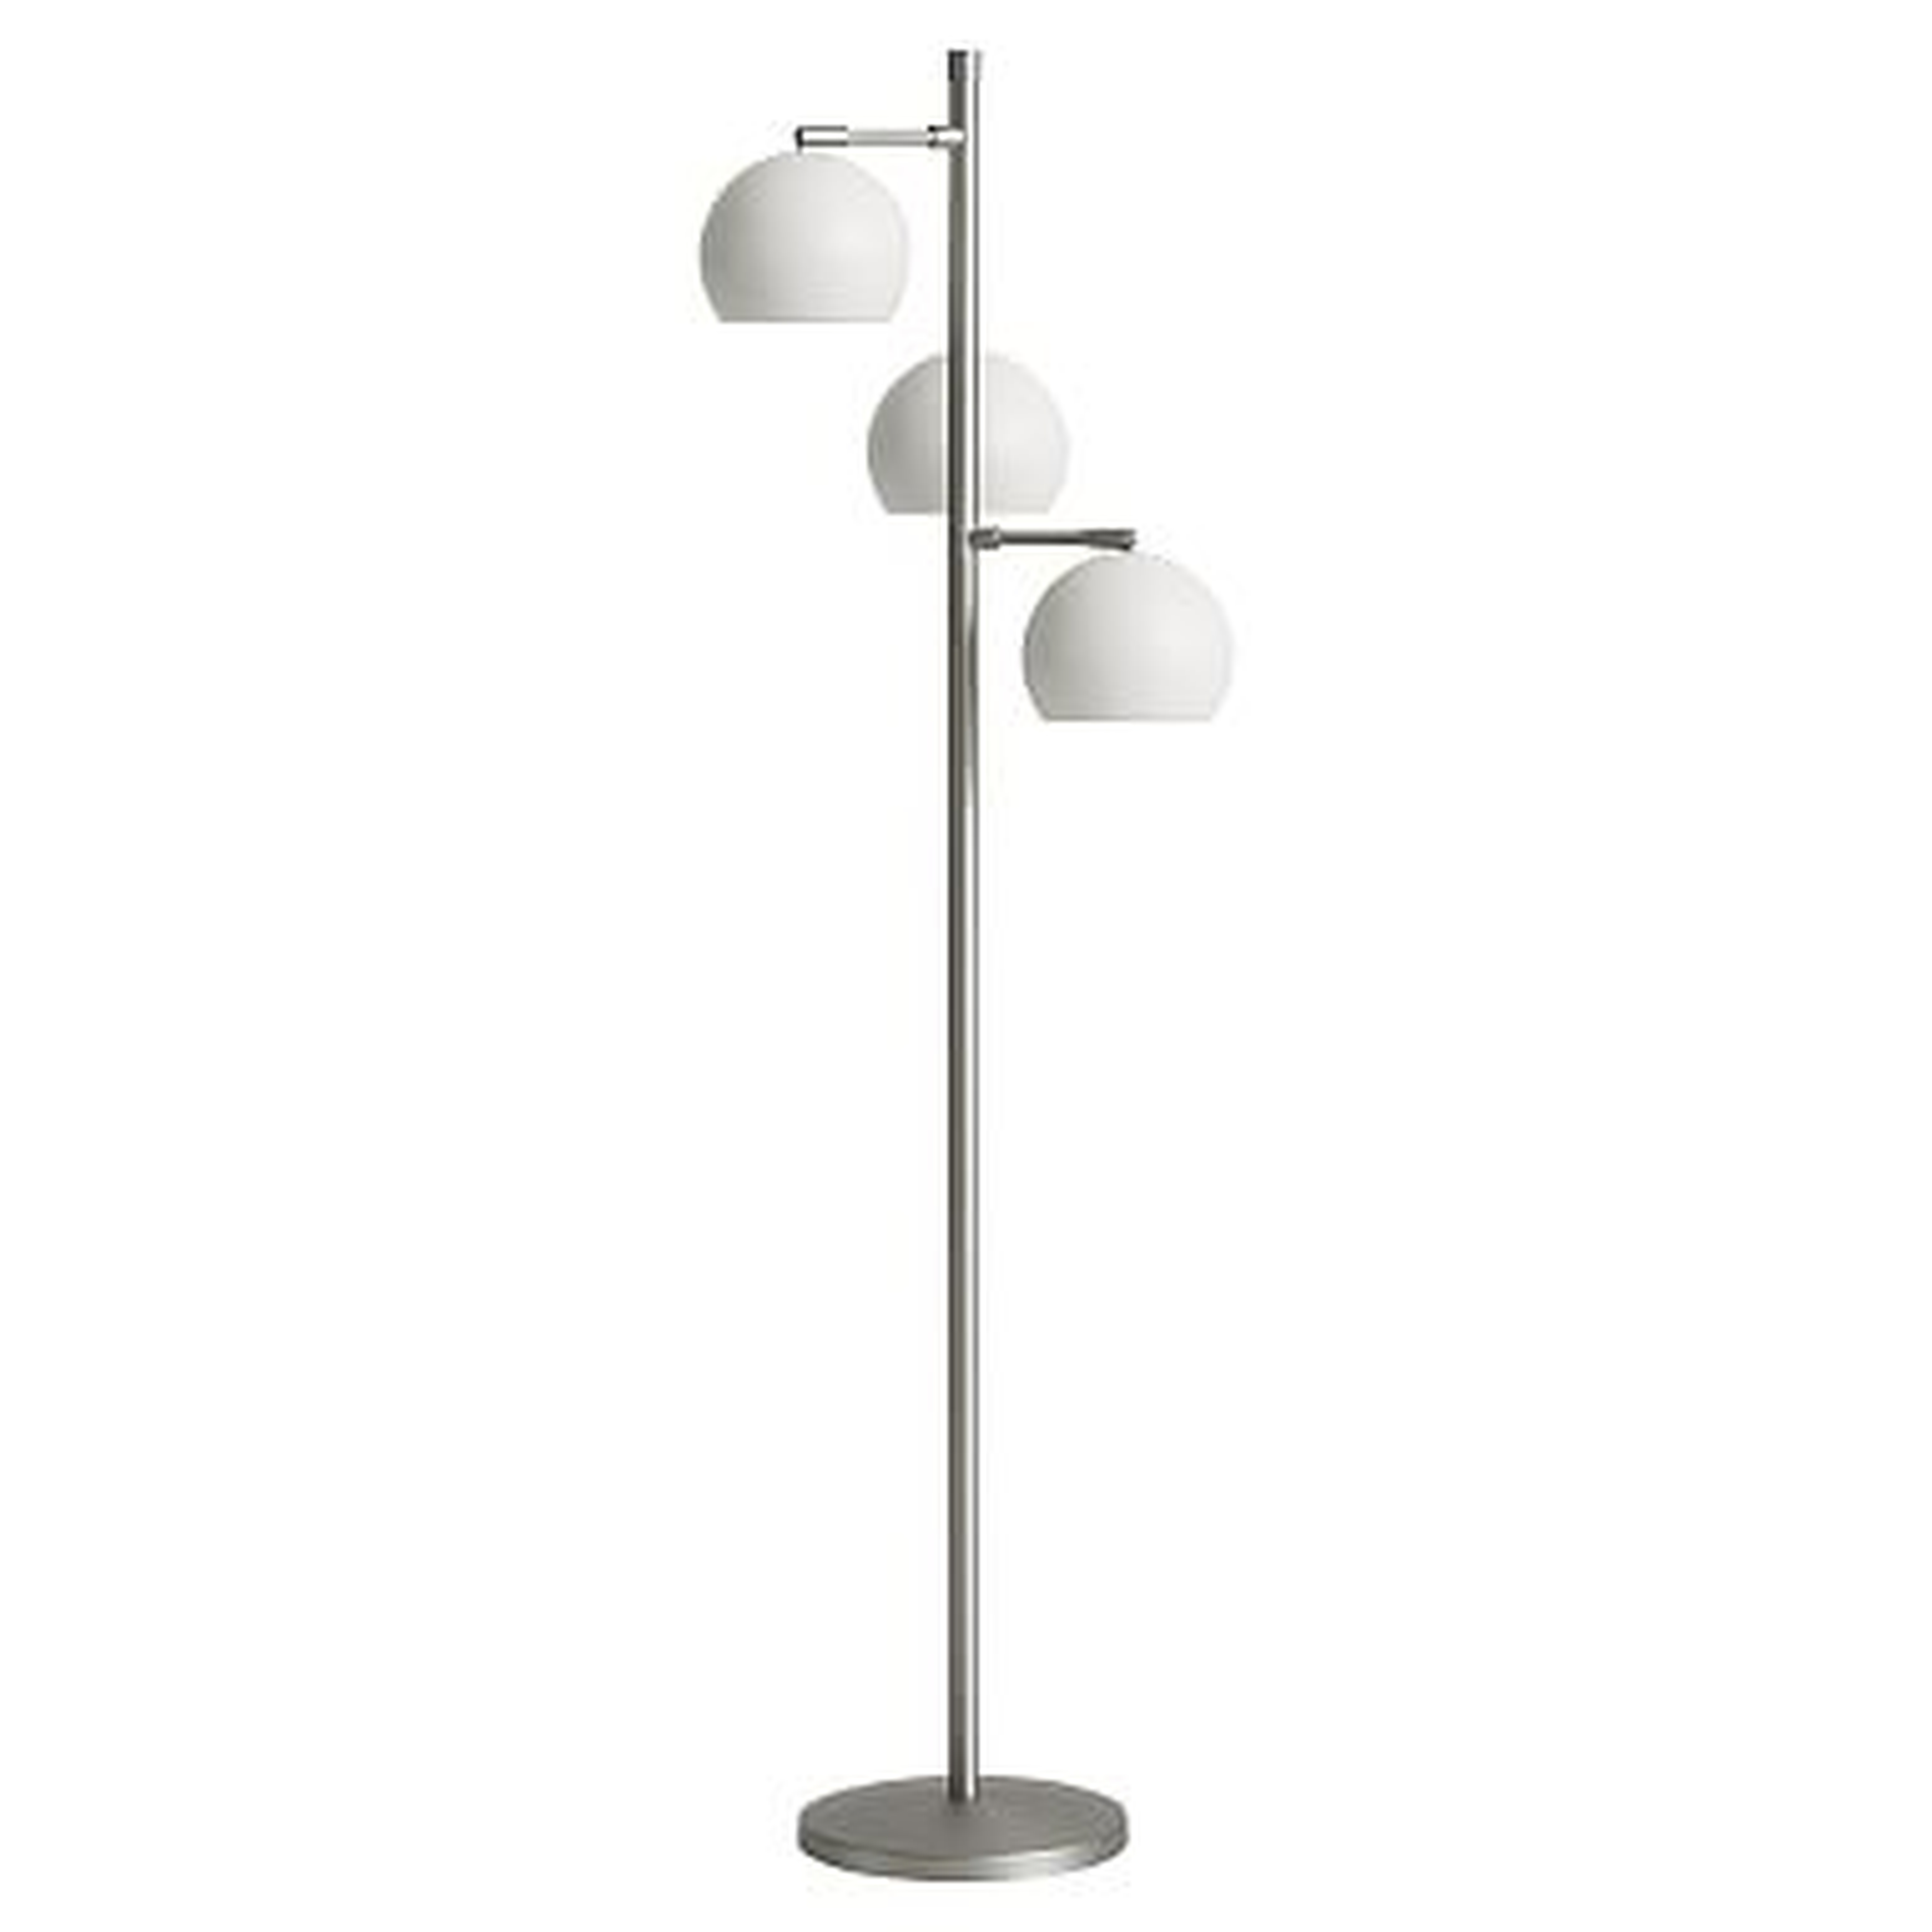 Solid Spotlight Floor Lamp, Simply White (CFL) - Pottery Barn Teen